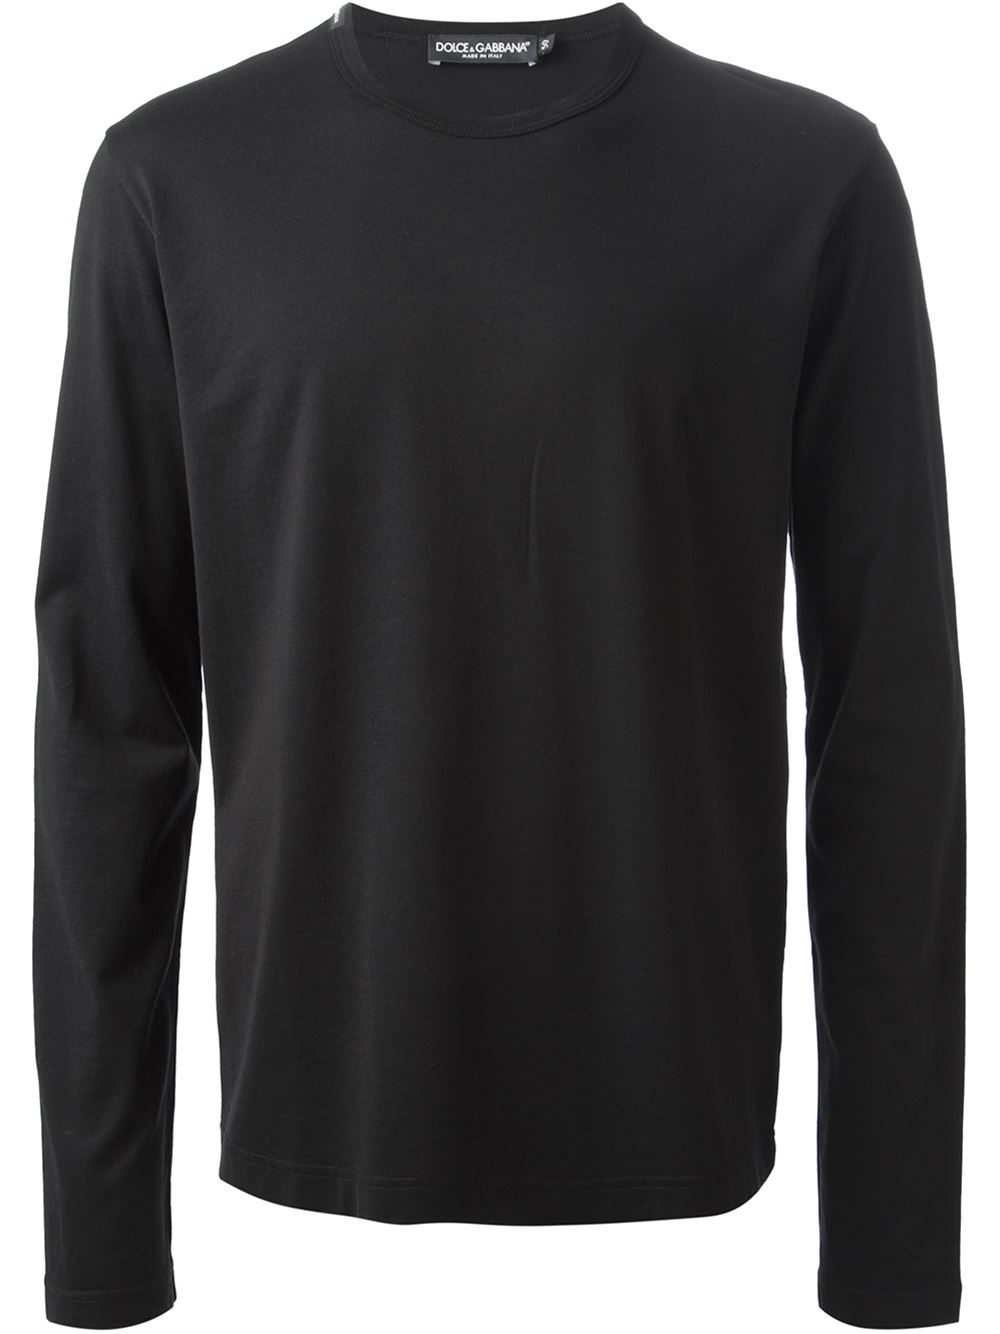 Lyst - Dolce & Gabbana Long Sleeve T-shirt in Black for Men